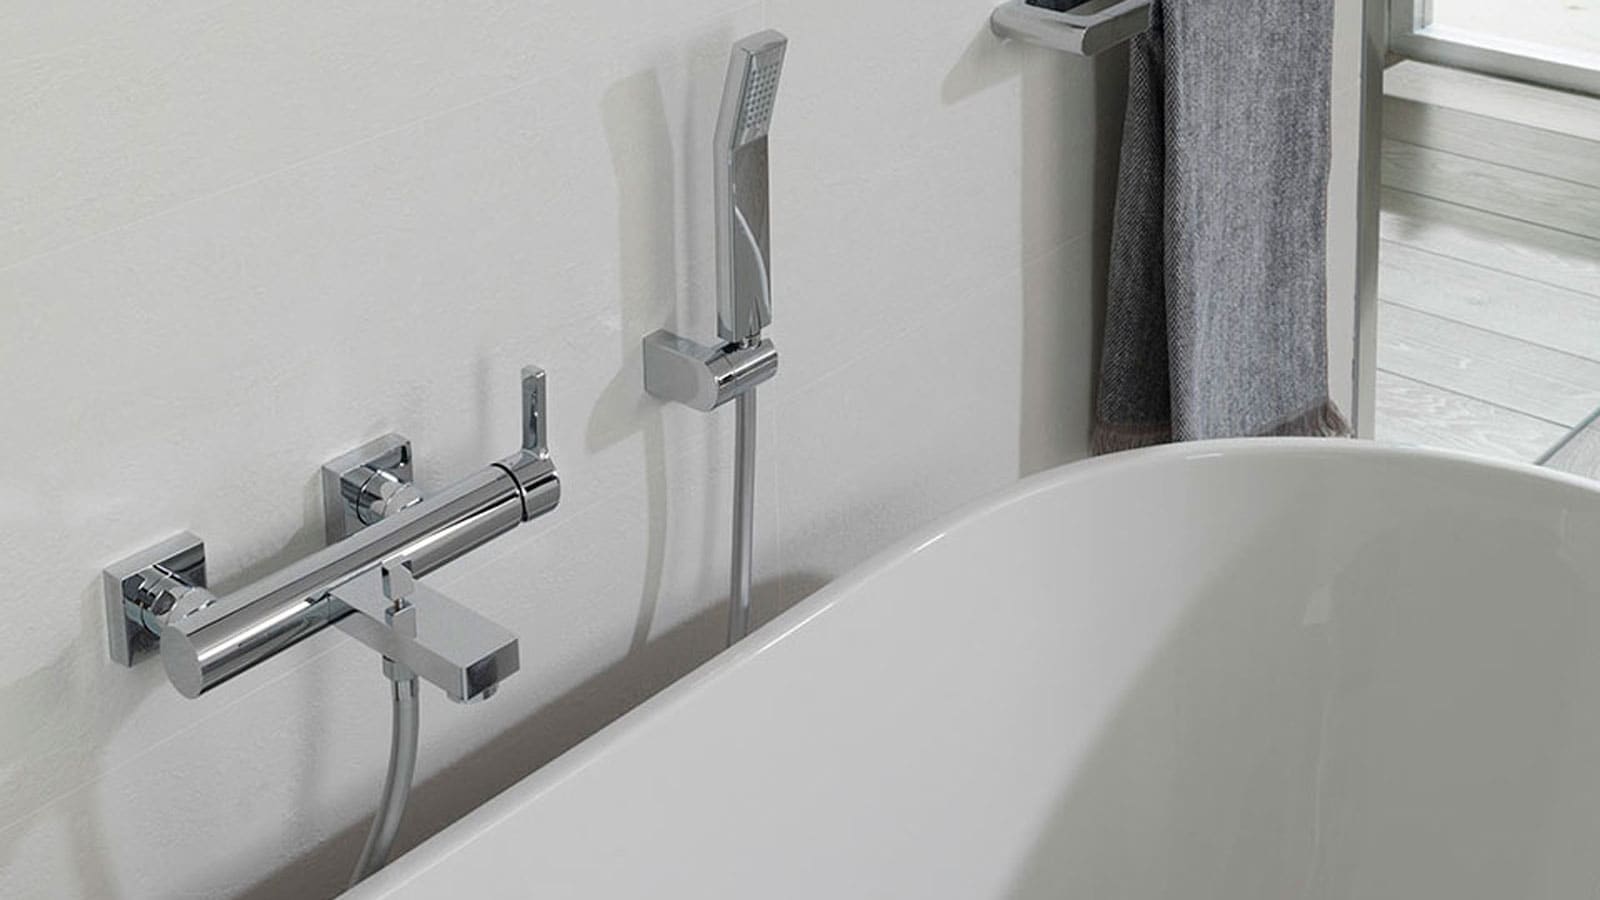 Wall-mounted-bath-mixer-tap-copy